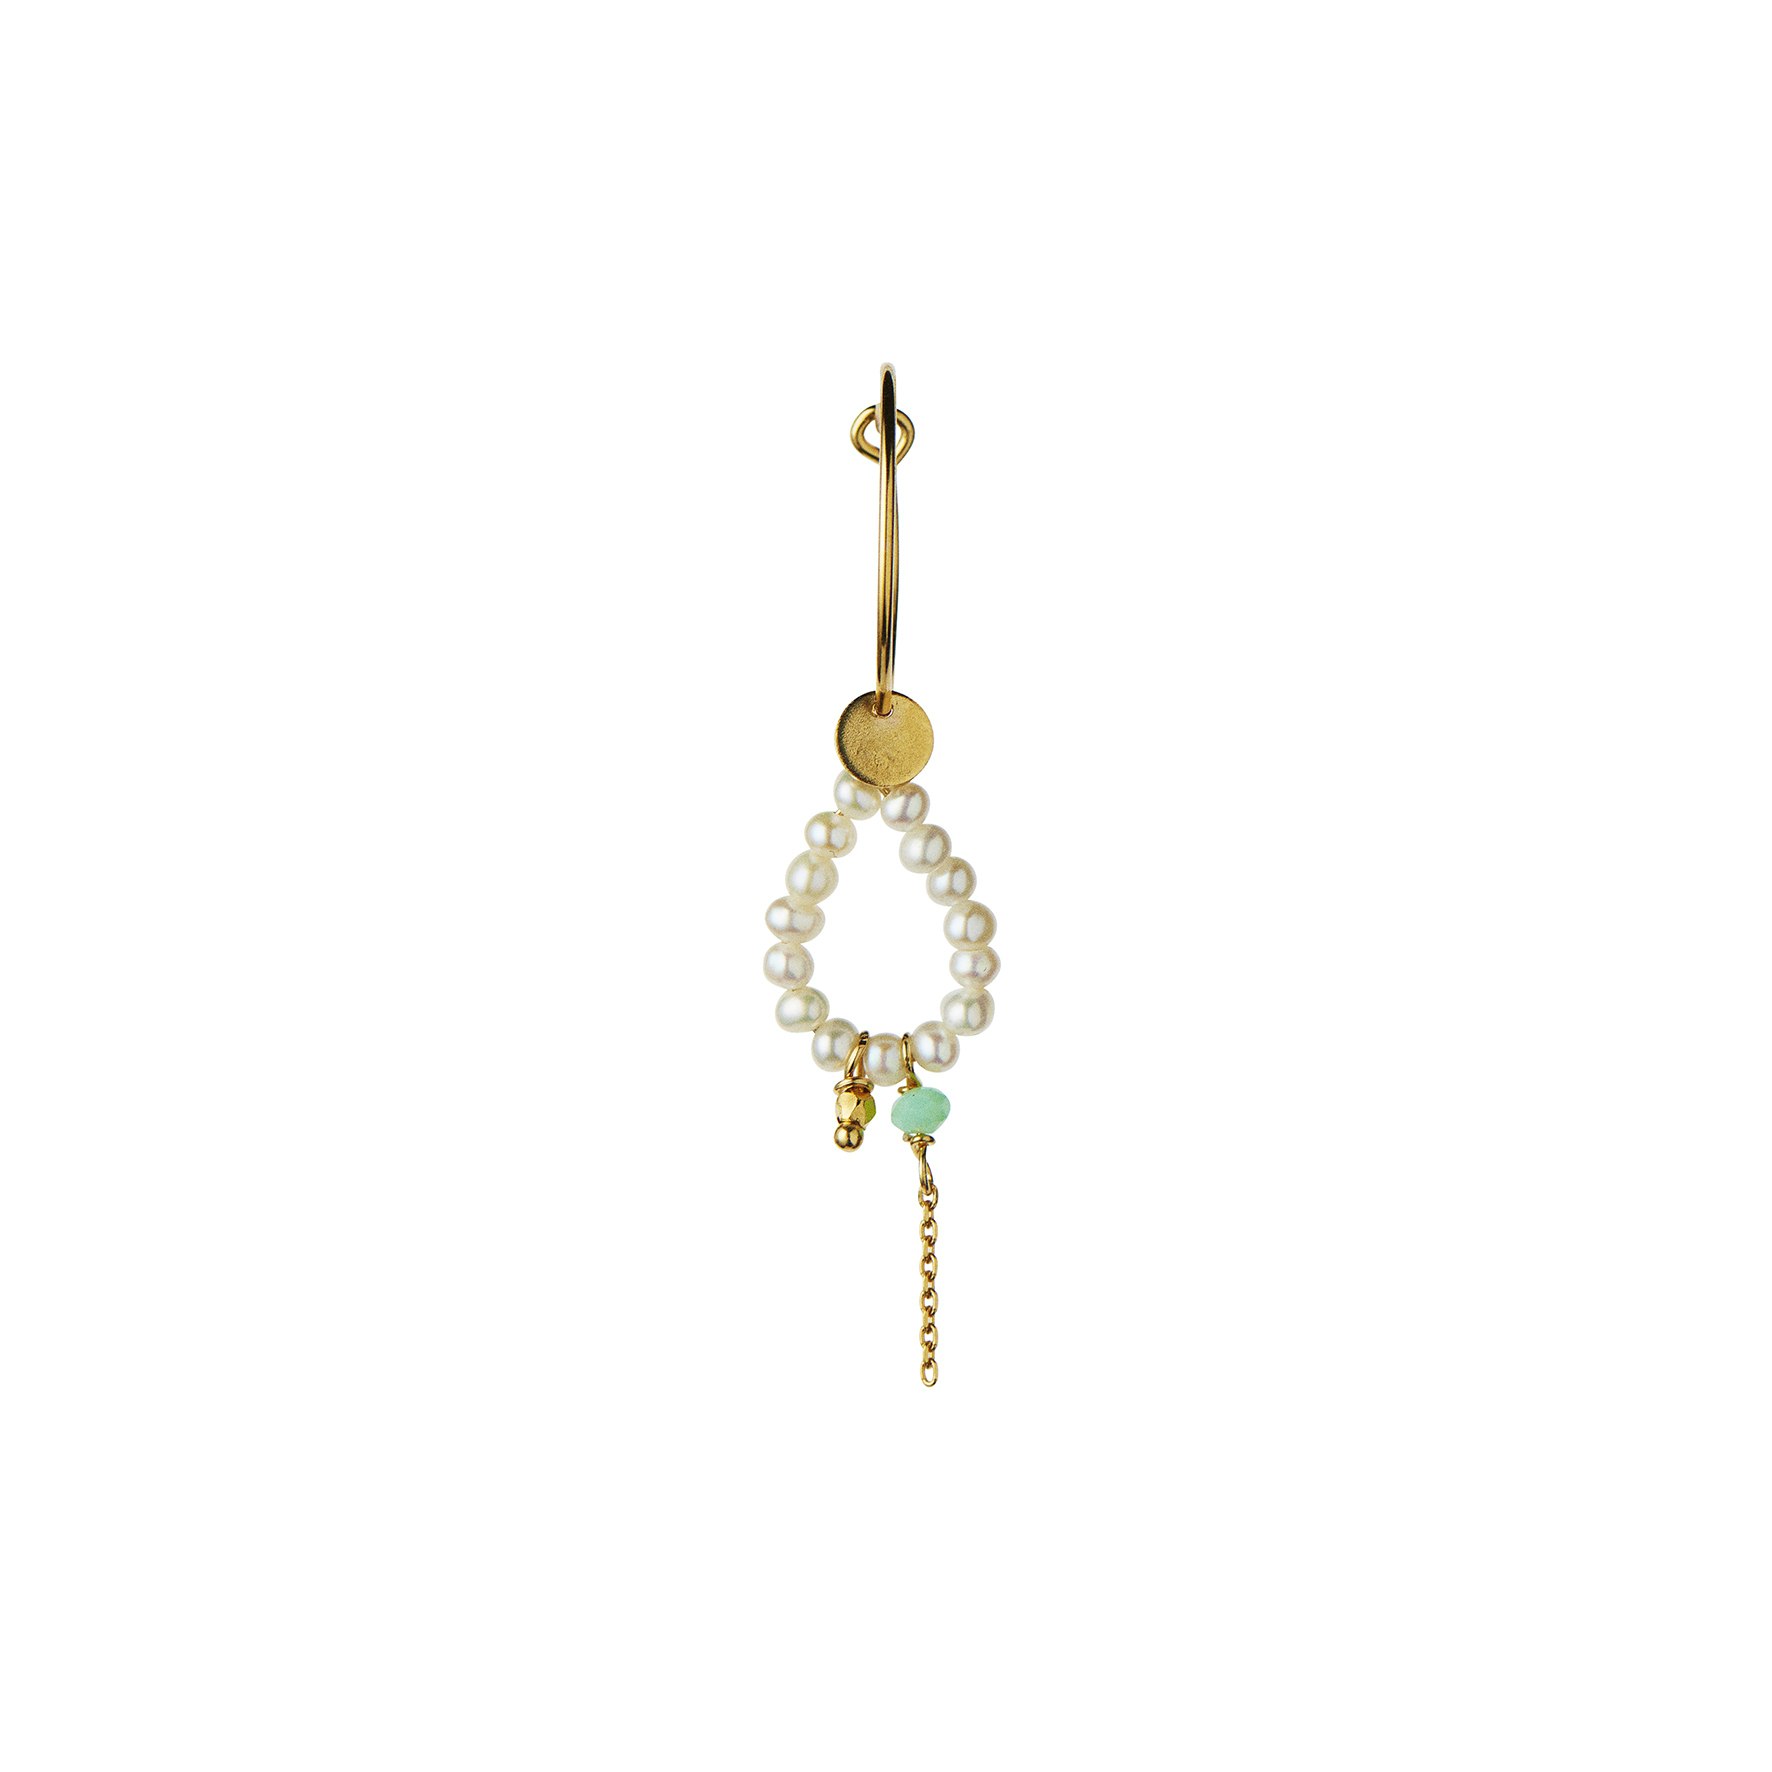 Heavenly Pearl Dream Hoop Green Stone & Chain von STINE A Jewelry in Vergoldet-Silber Sterling 925